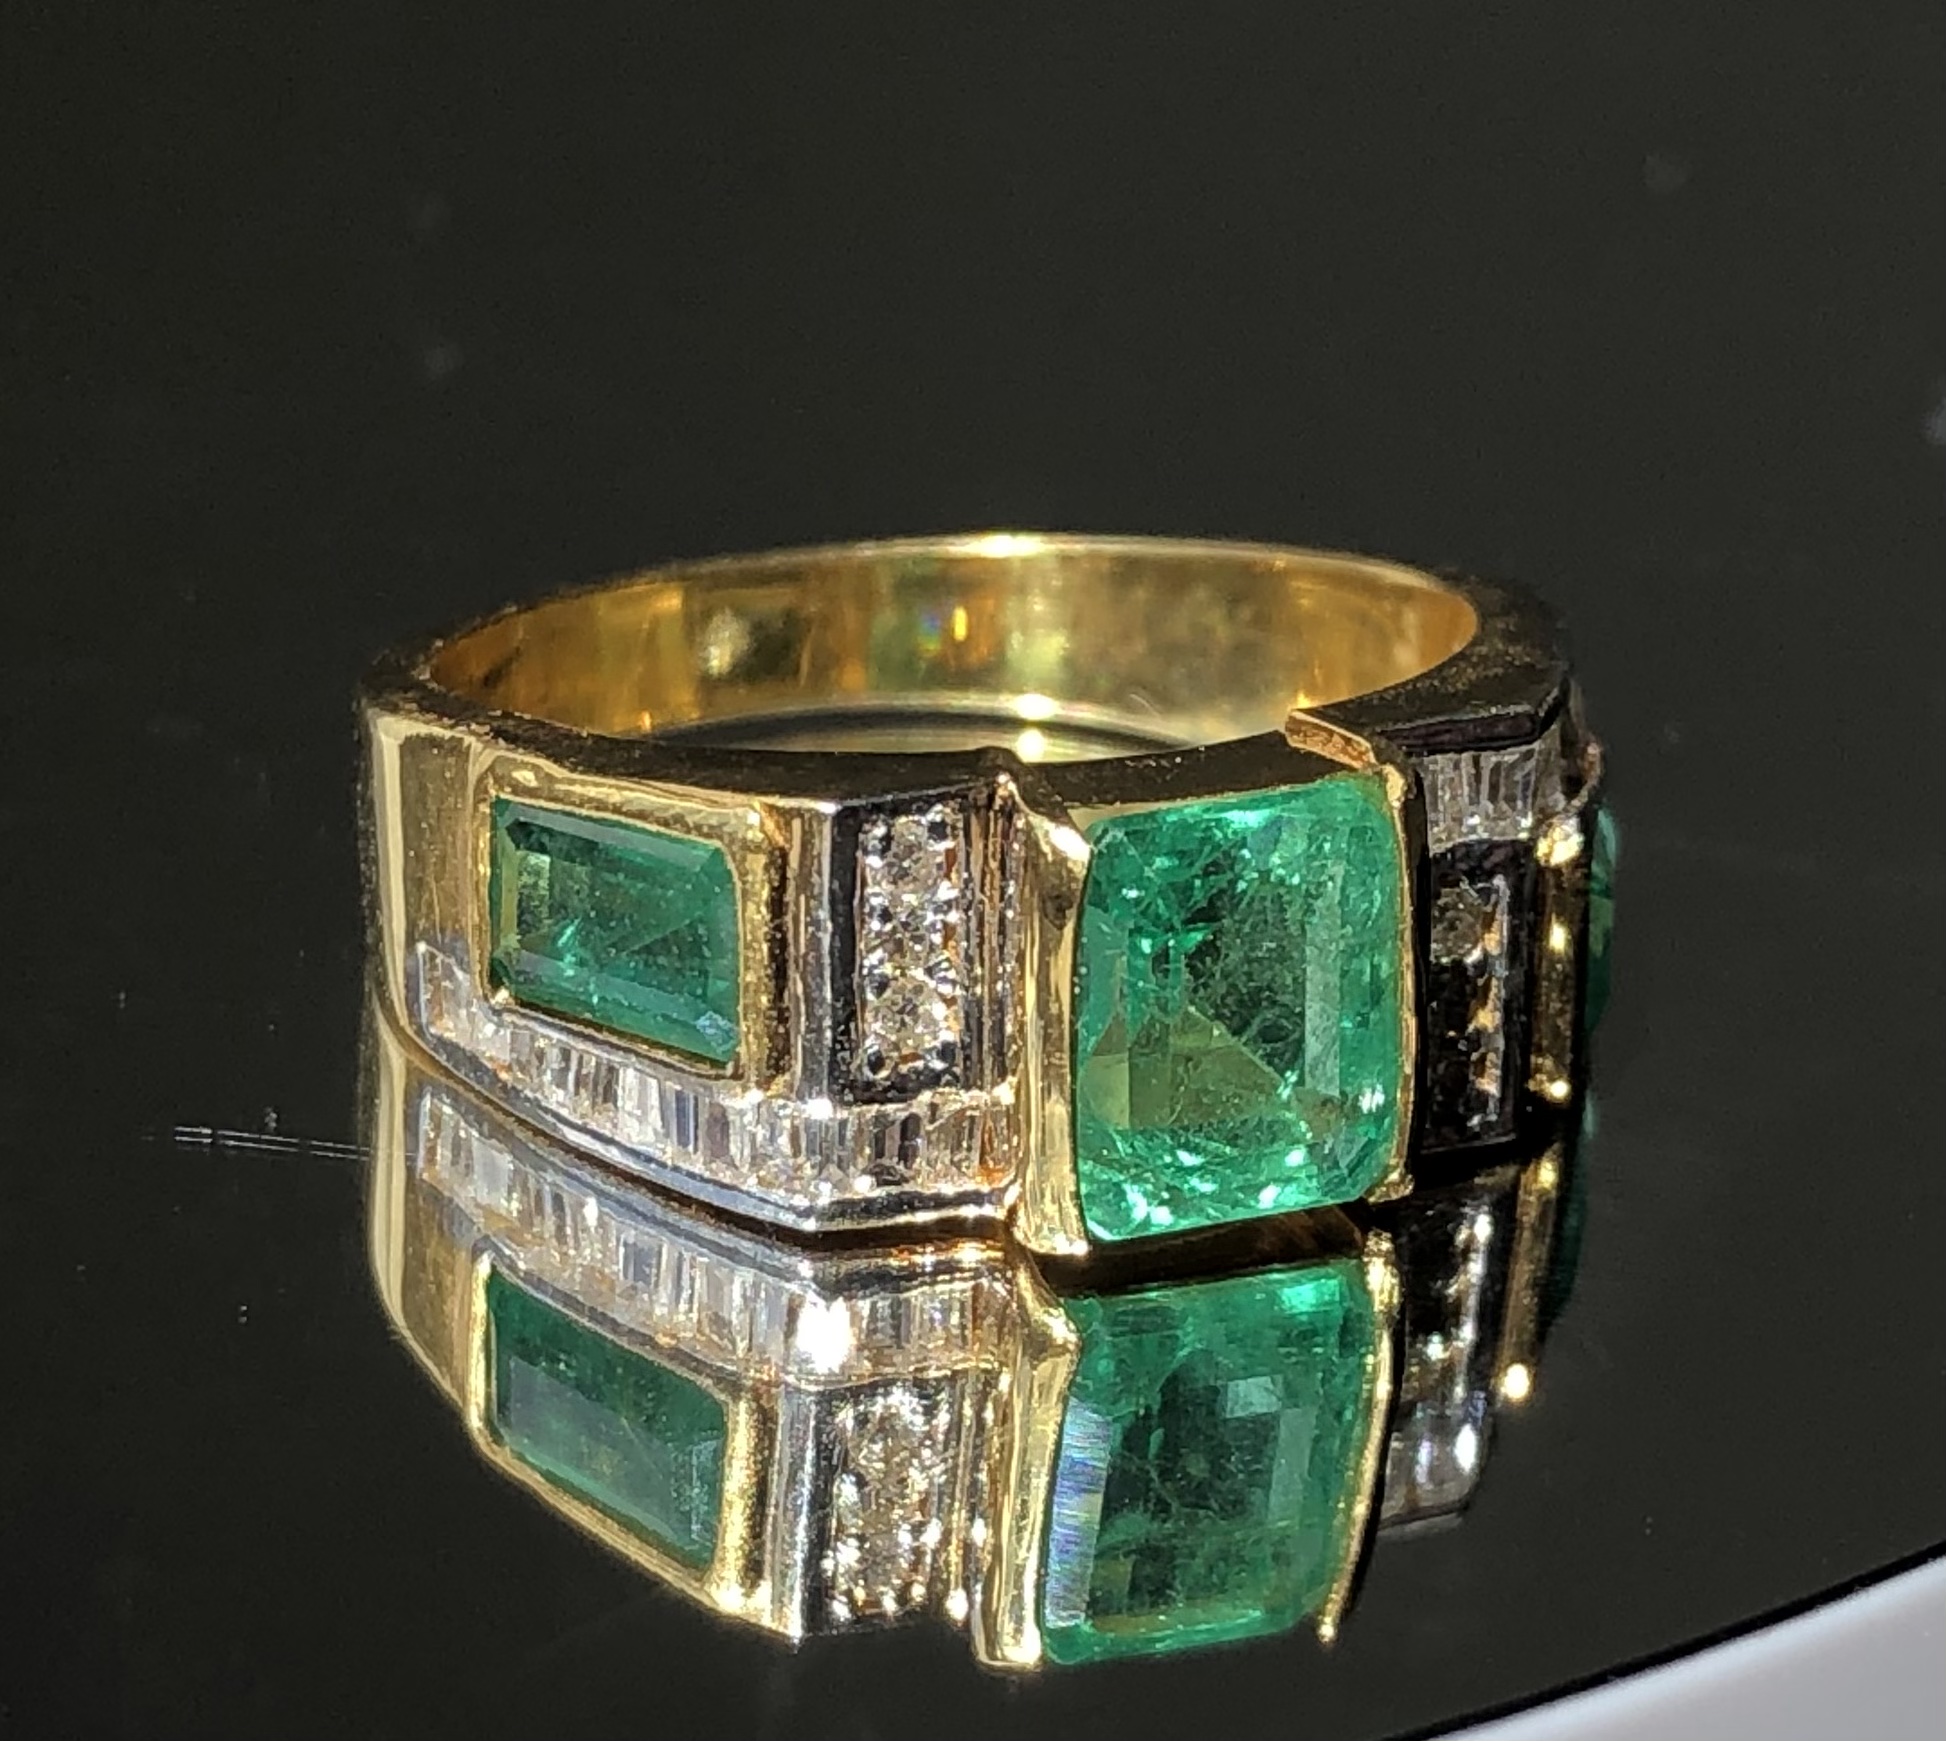 Beautiful 2.80 Carat Natural Emerald Ring With Natural Diamonds and 18k Gold - Image 5 of 7